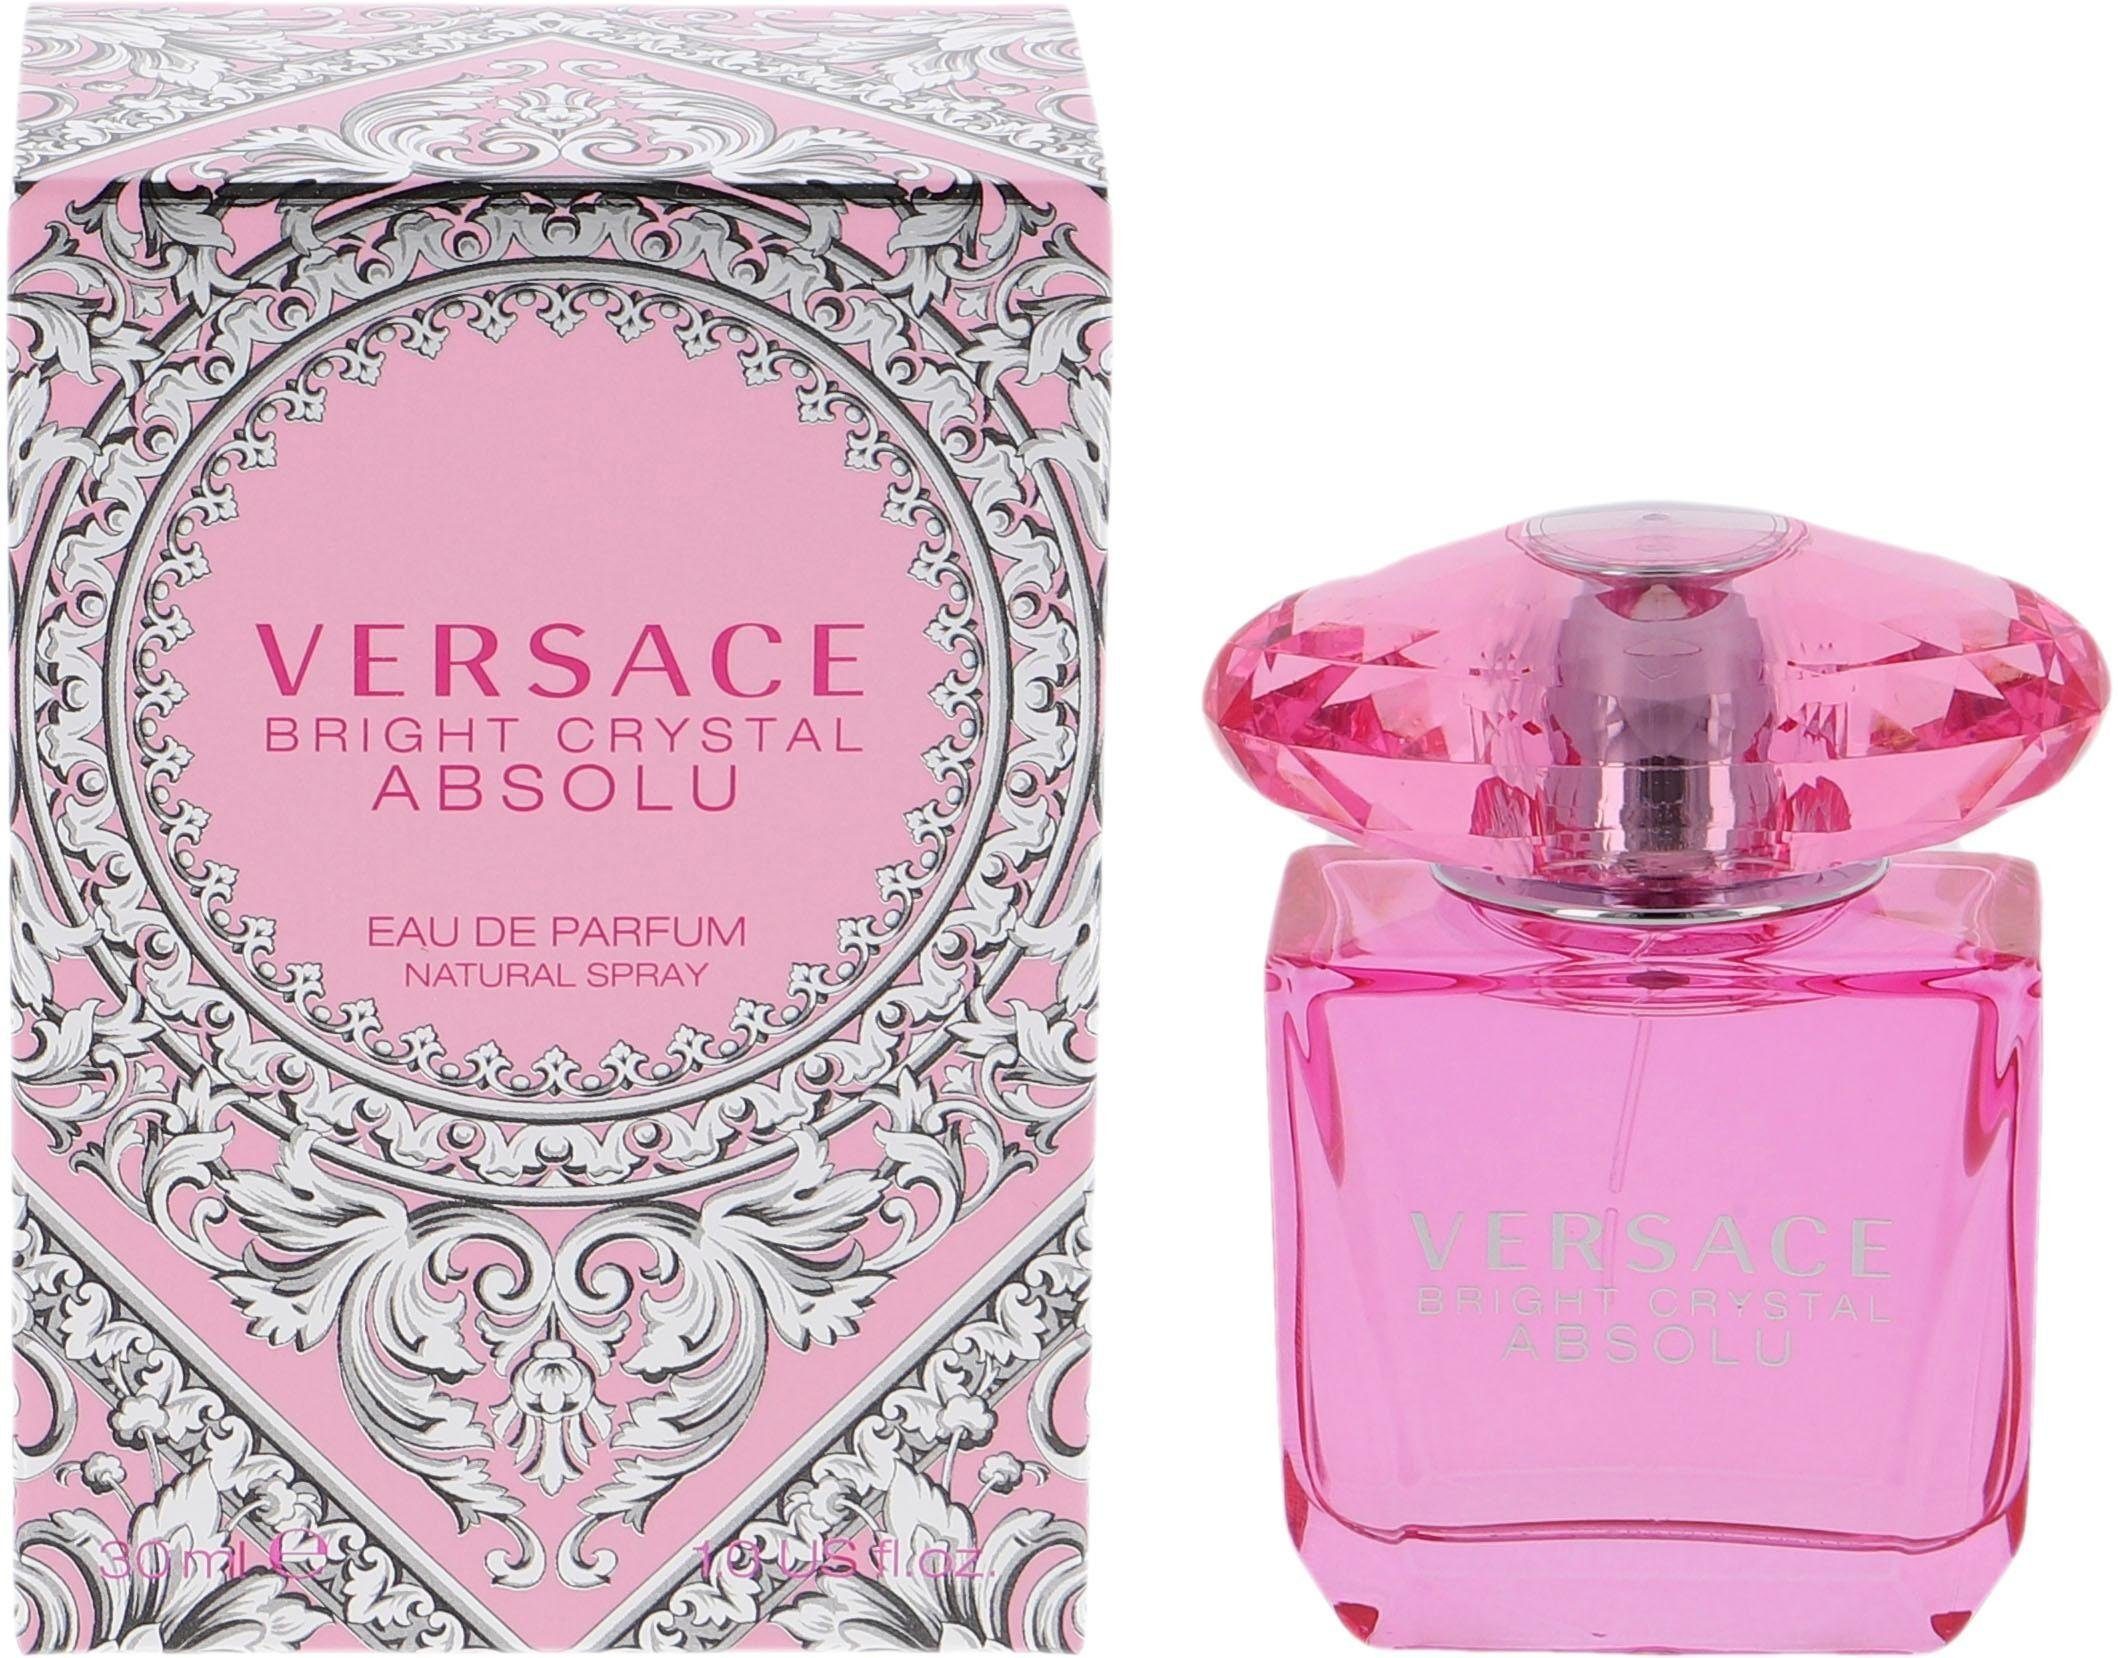 Absolu Versace Eau Versace Parfum de Crystal Bright